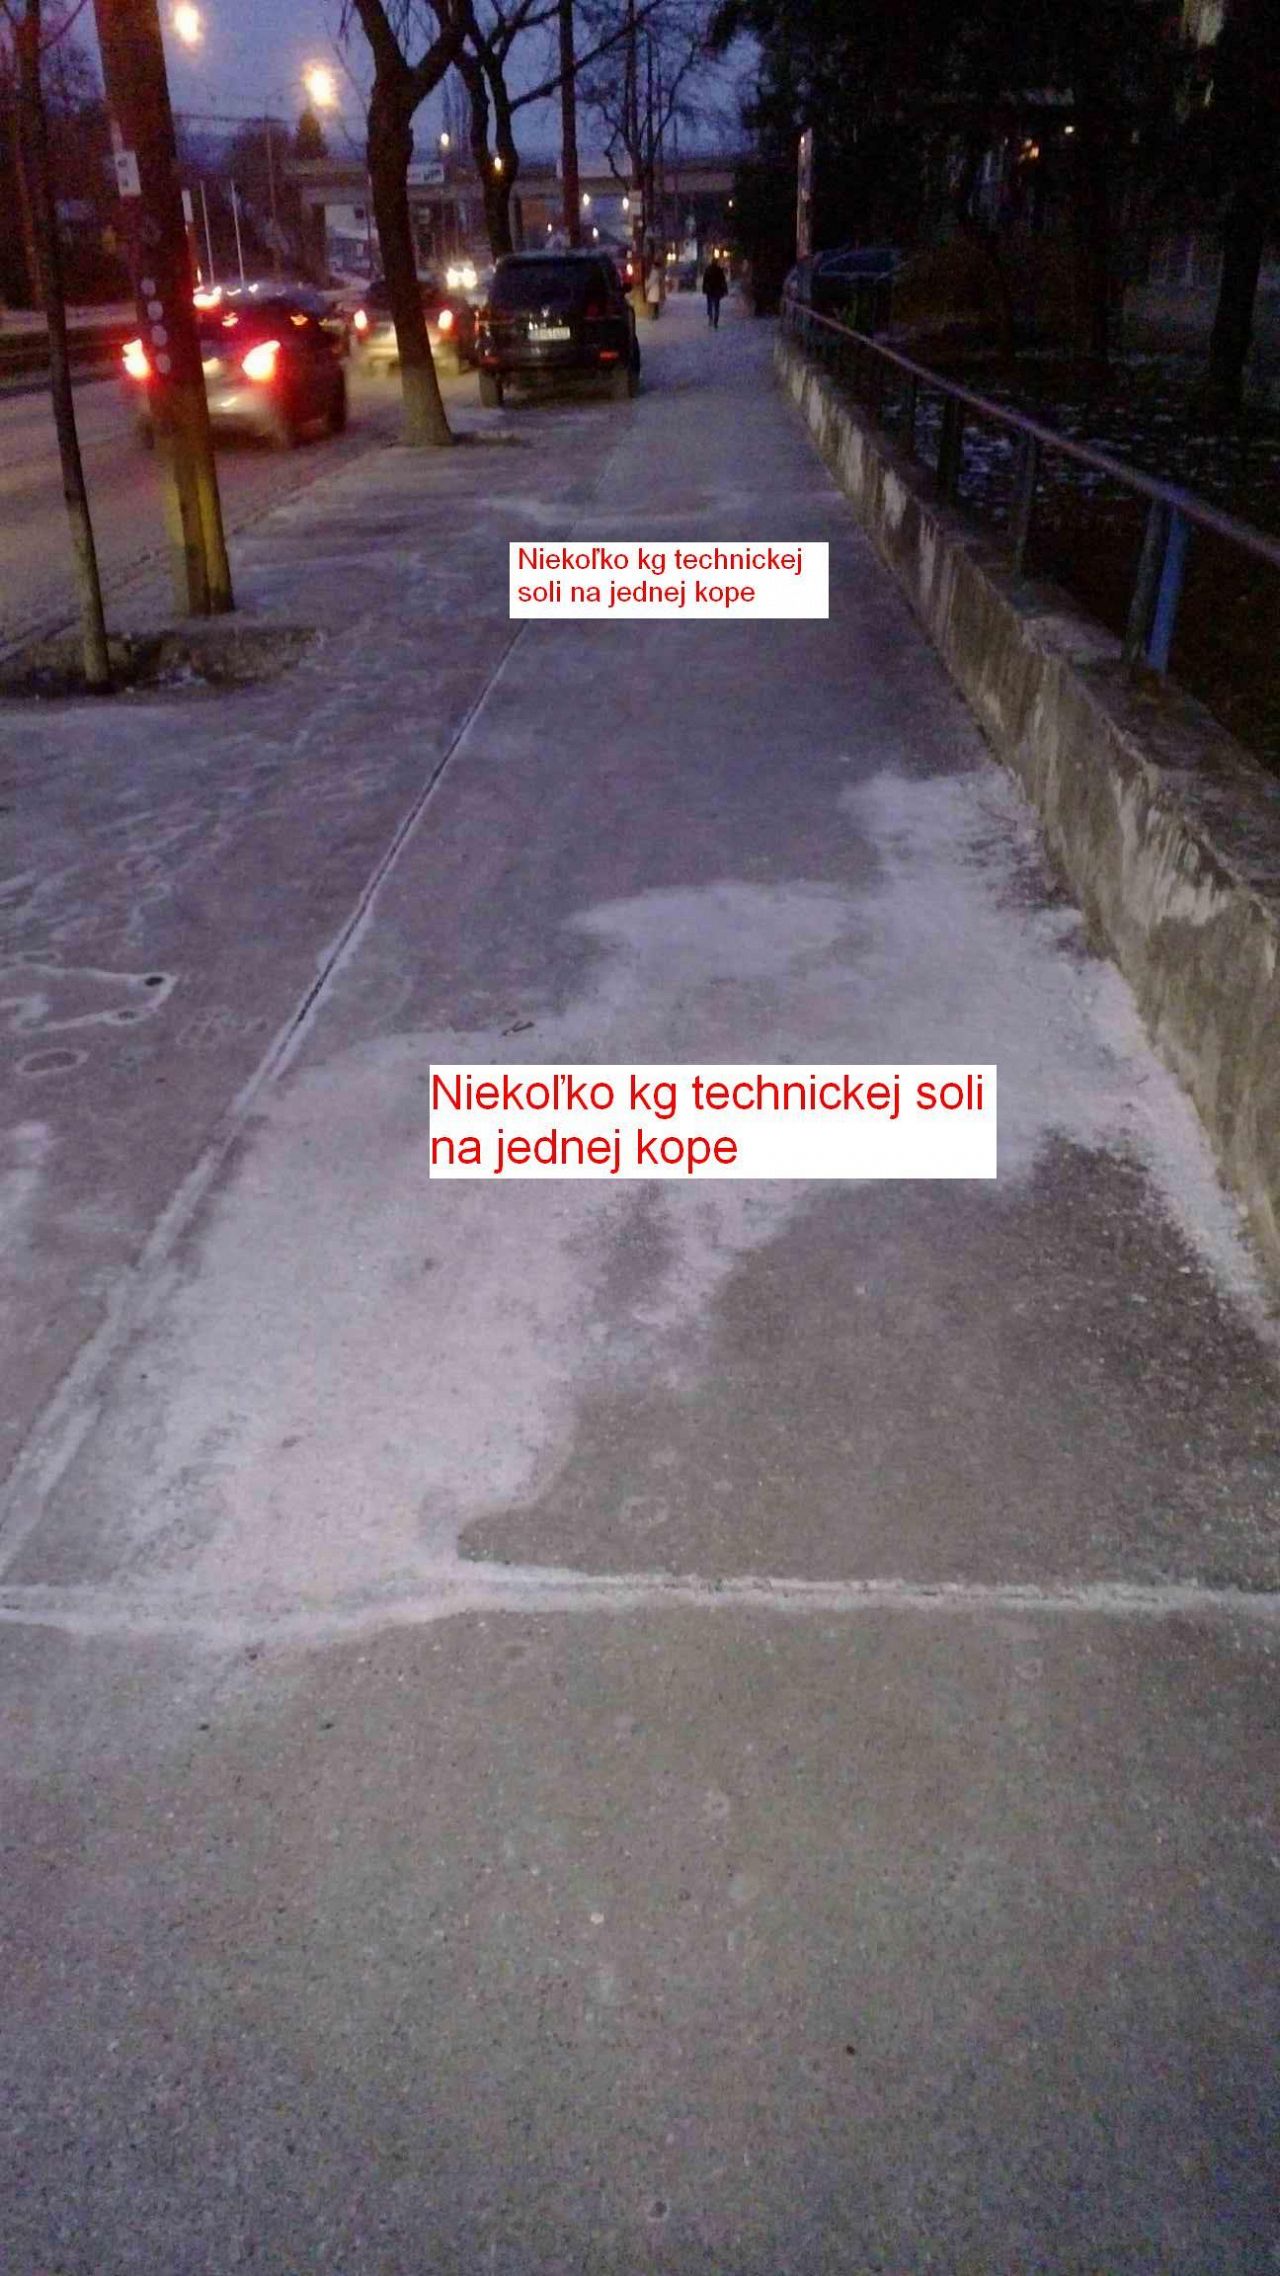 Nelegálny posyp technickou soľou, Nové Mesto, Bratislava |  Odkazprestarostu.sk